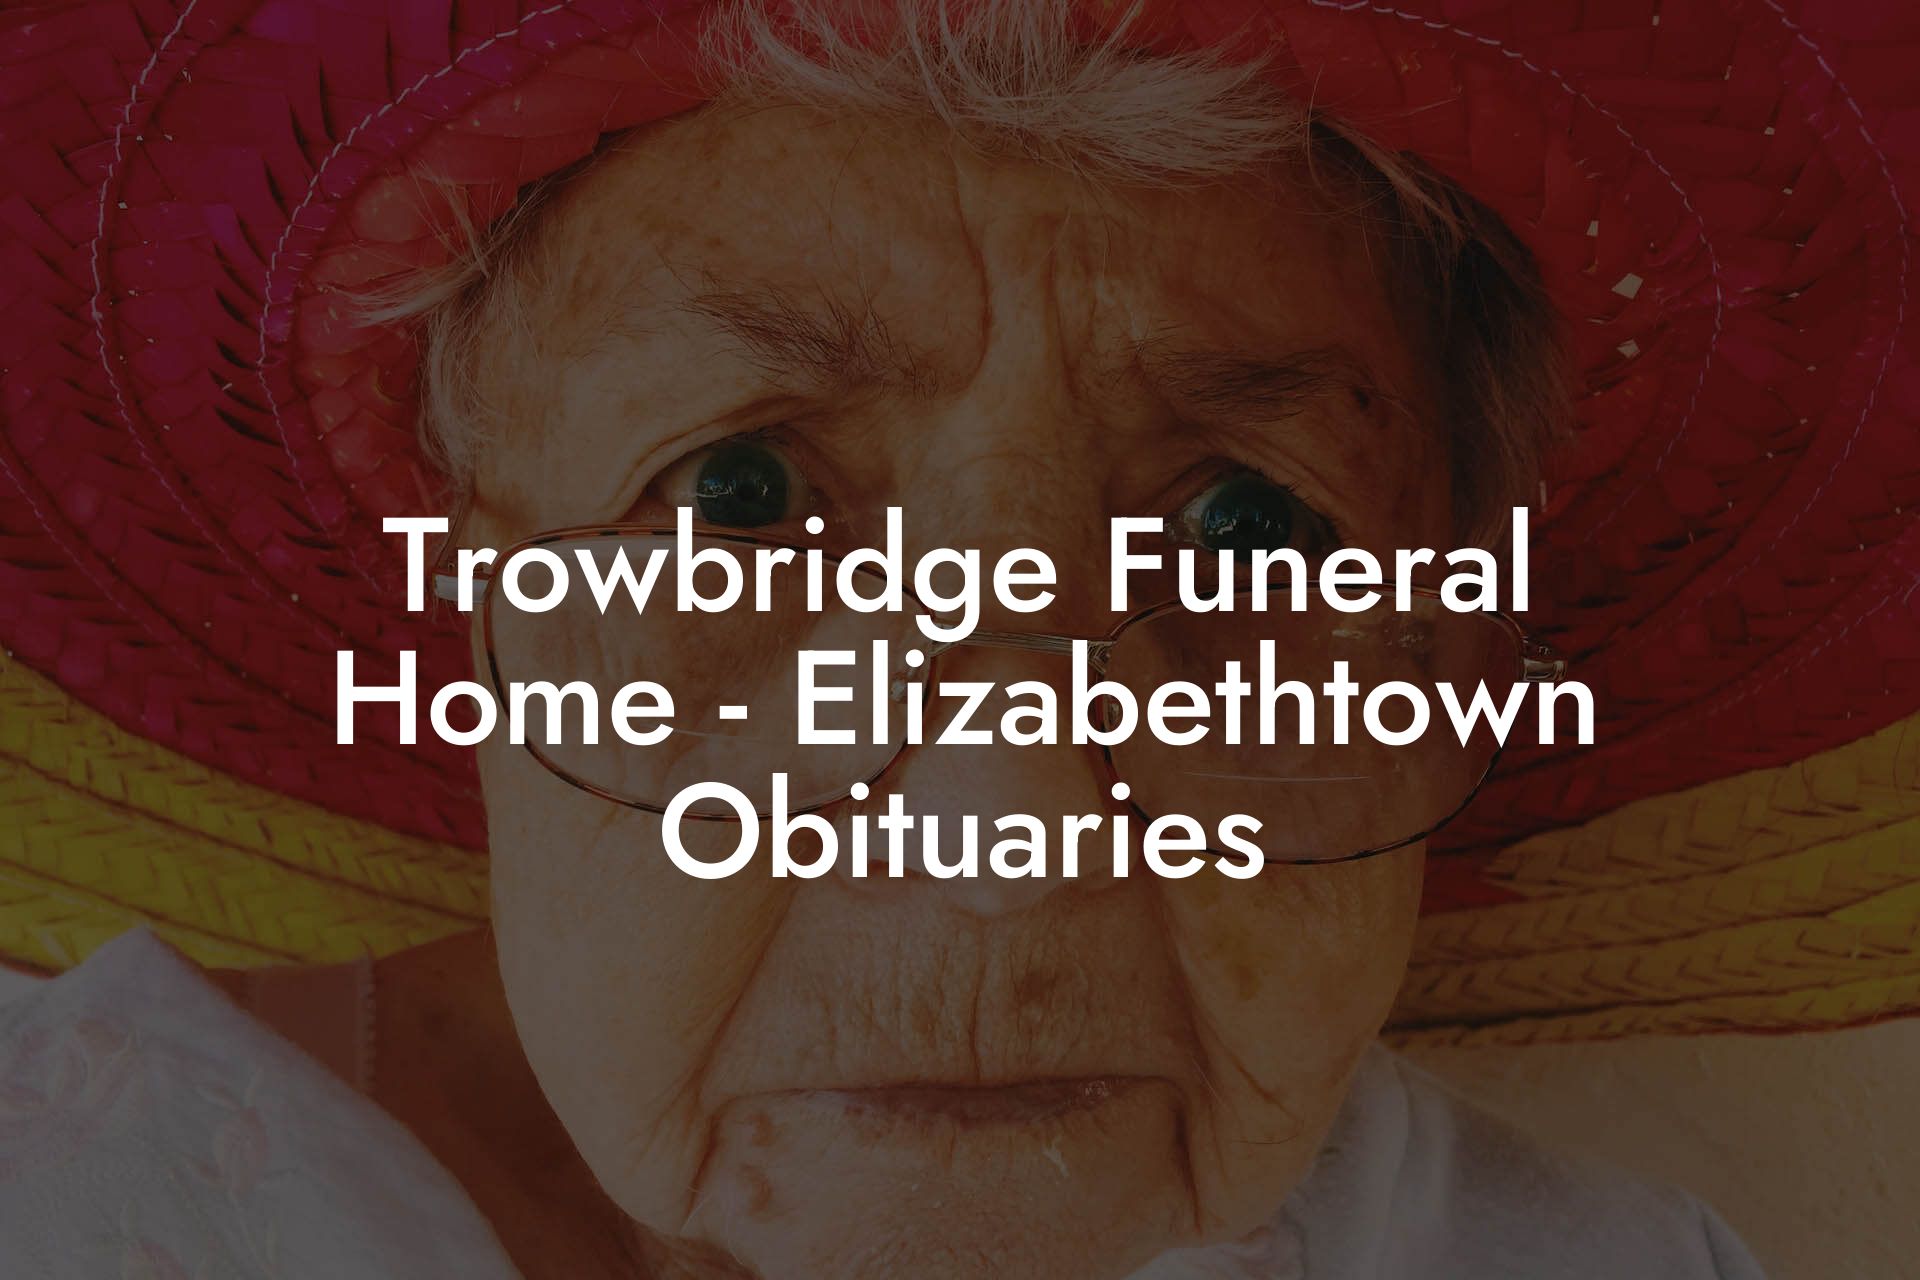 Trowbridge Funeral Home - Elizabethtown Obituaries